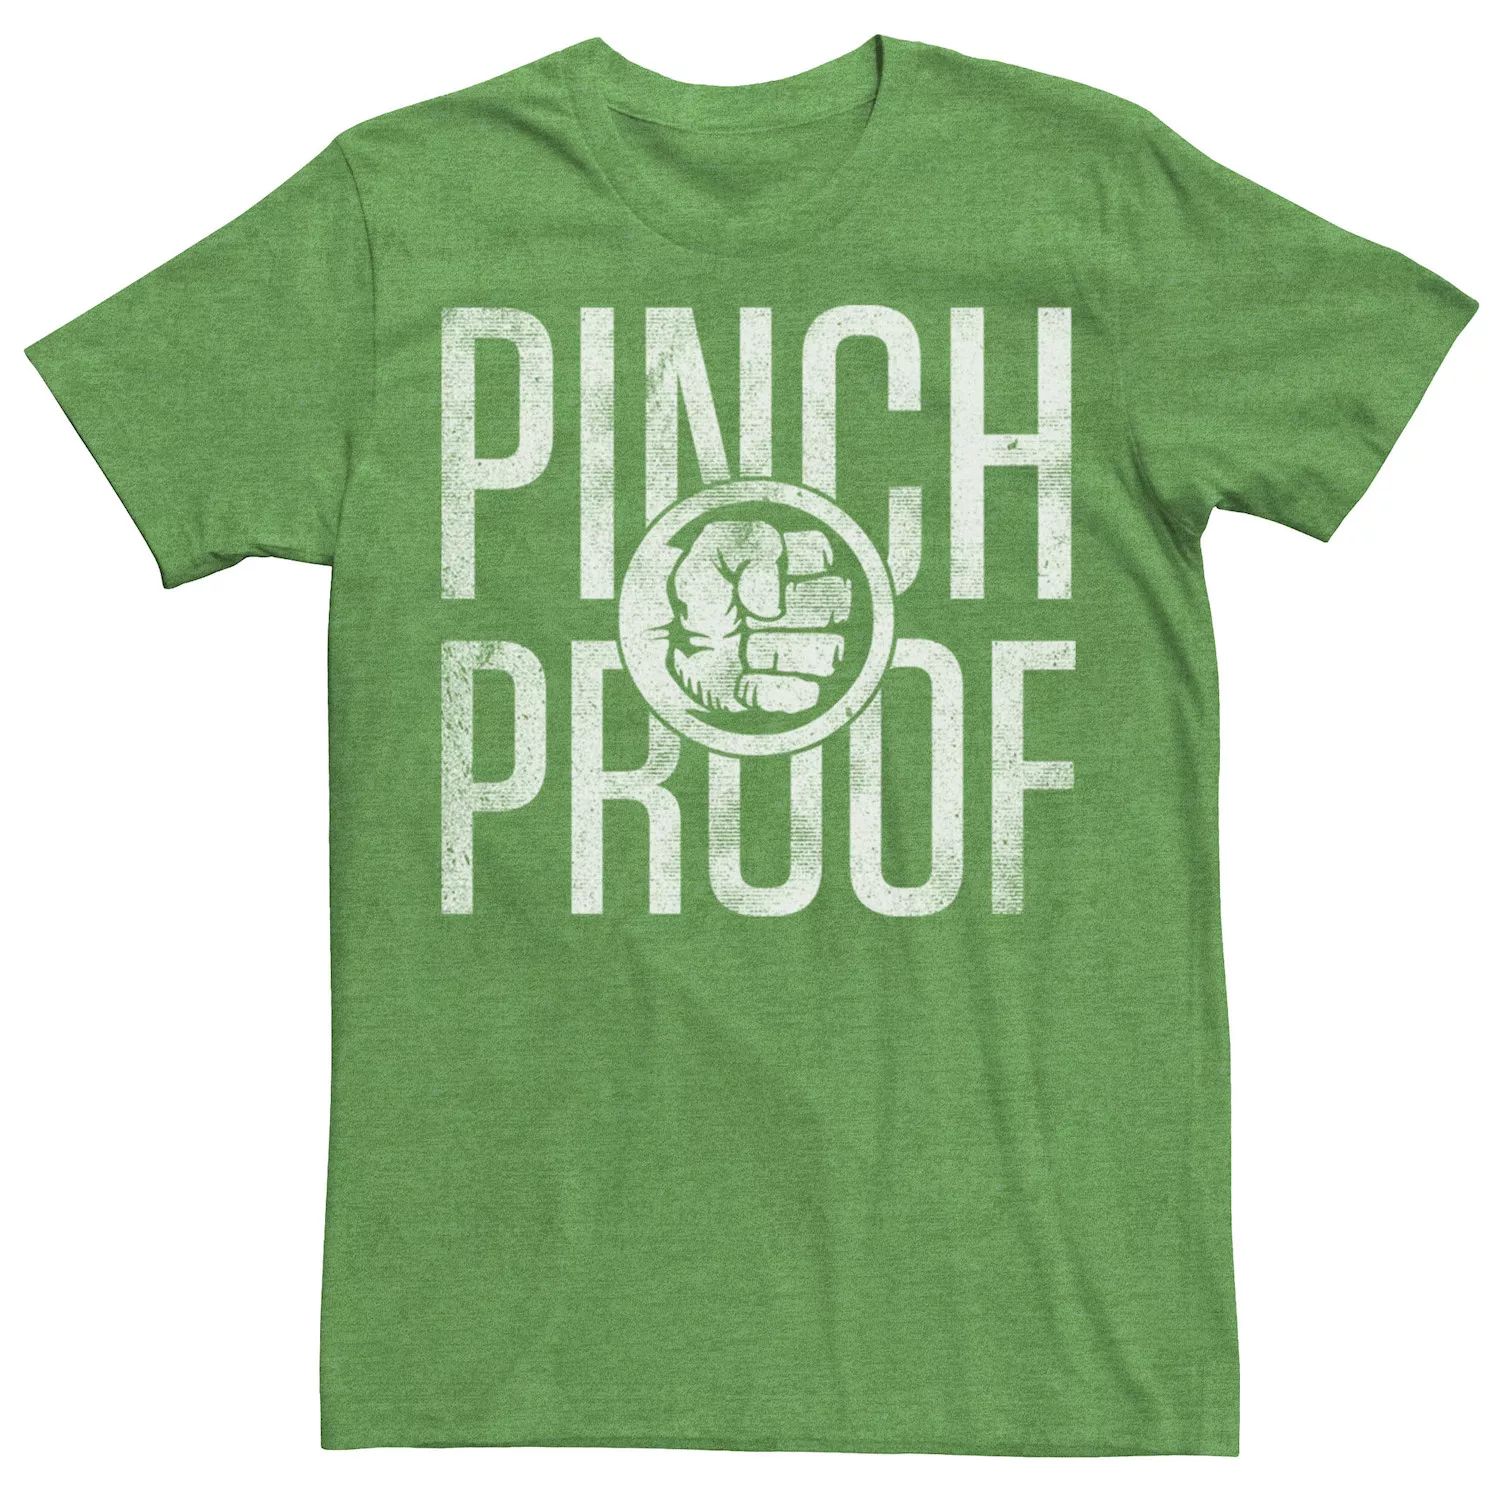 Мужская футболка Marvel Hulk Pinch Proof ко Дню Святого Патрика мужская футболка с надписью hulk lucky ко дню святого патрика marvel